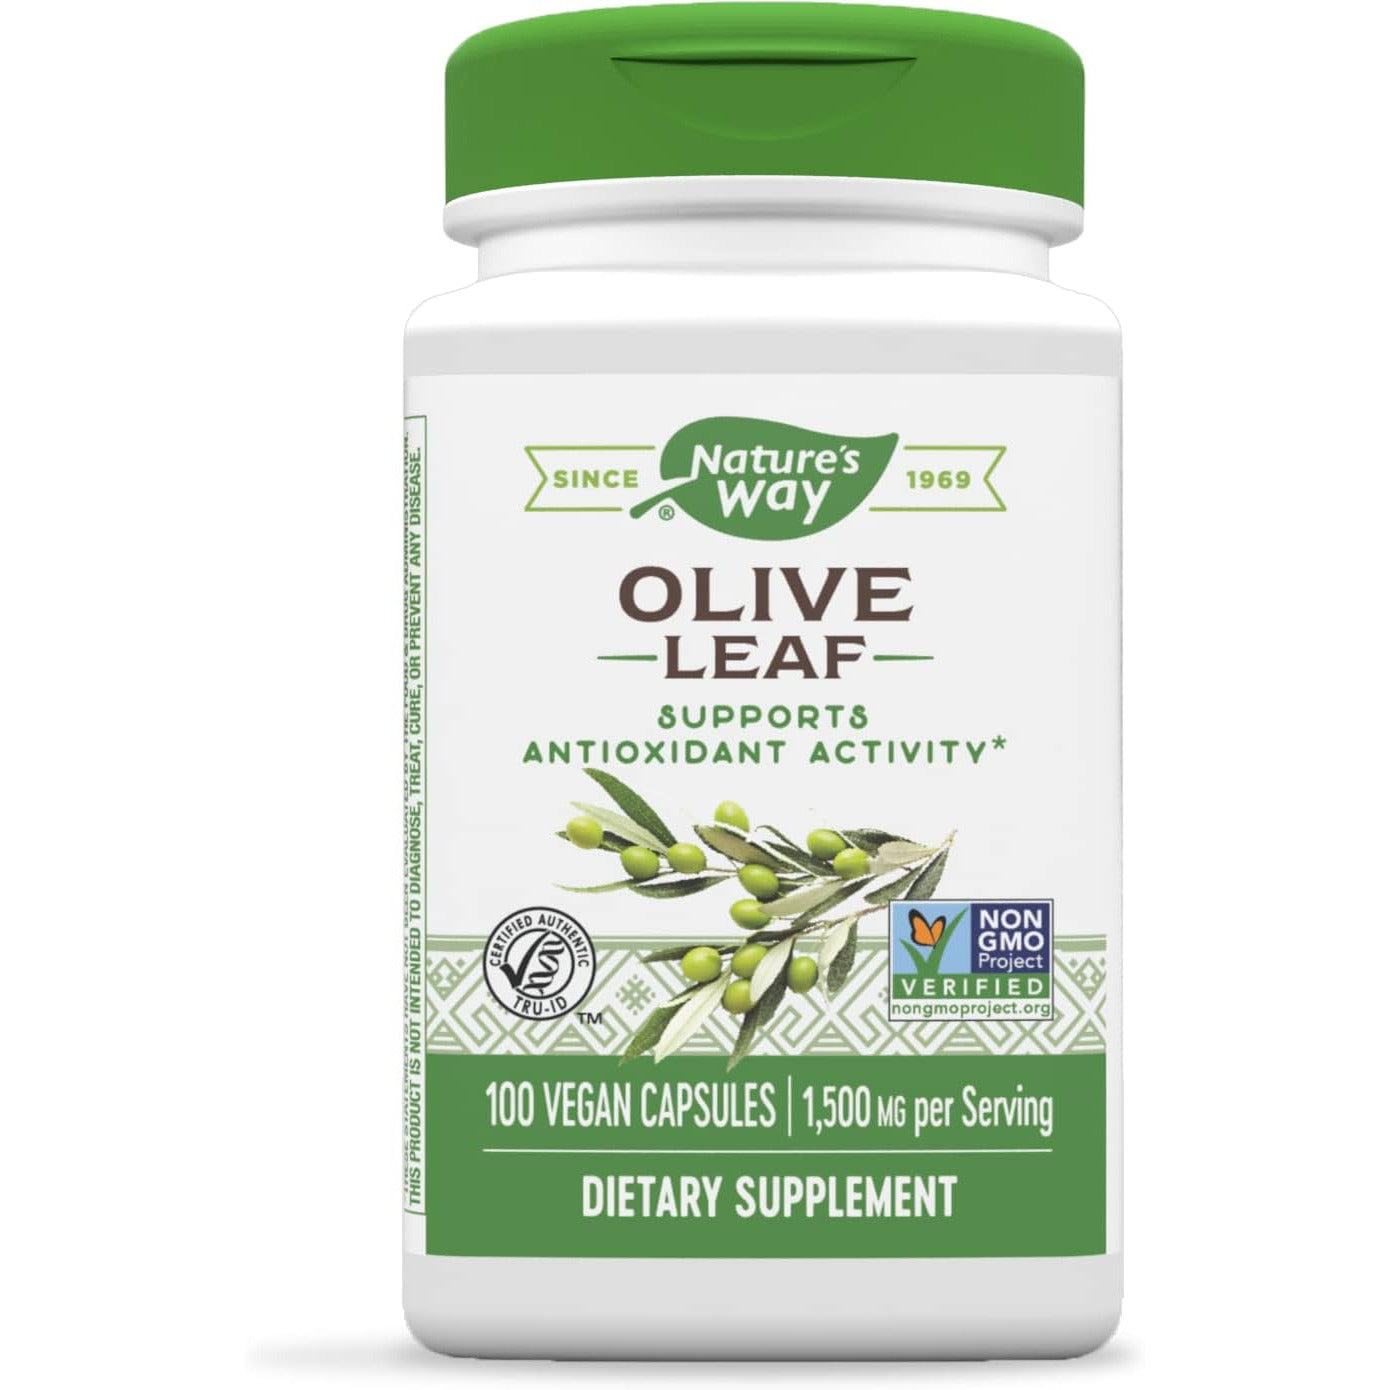 Nature's Way Premium Herbal Olive Leaf 1500 mg per serving